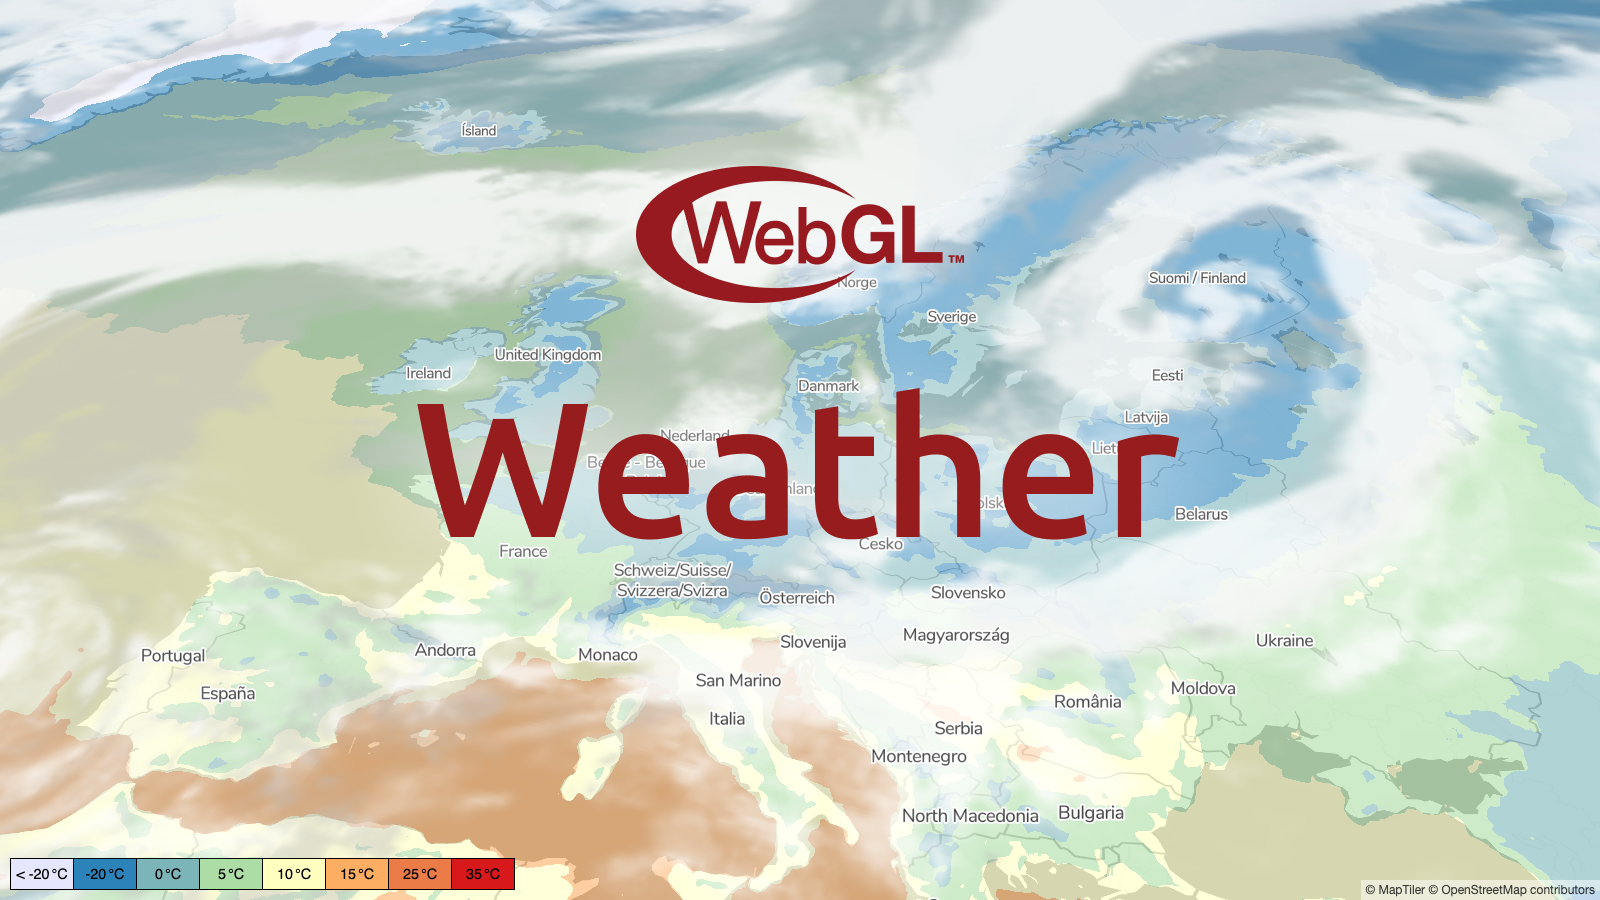 Visualize Weather Forecast with WebGL image